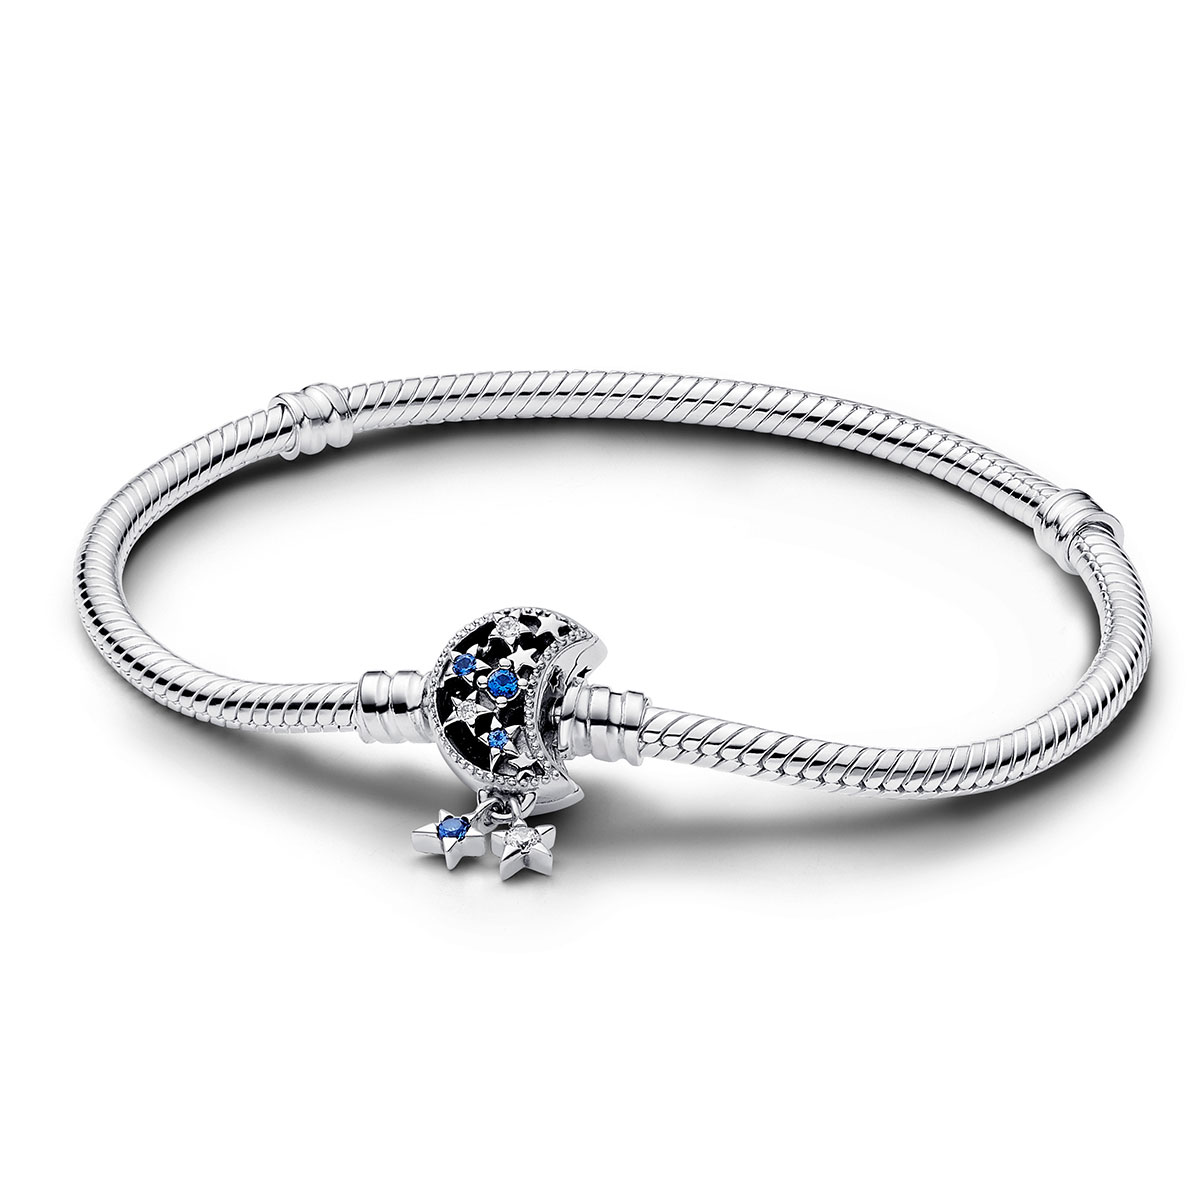 Pandora Moments Sparkling Moon Clasp Snake Chain Bracelet